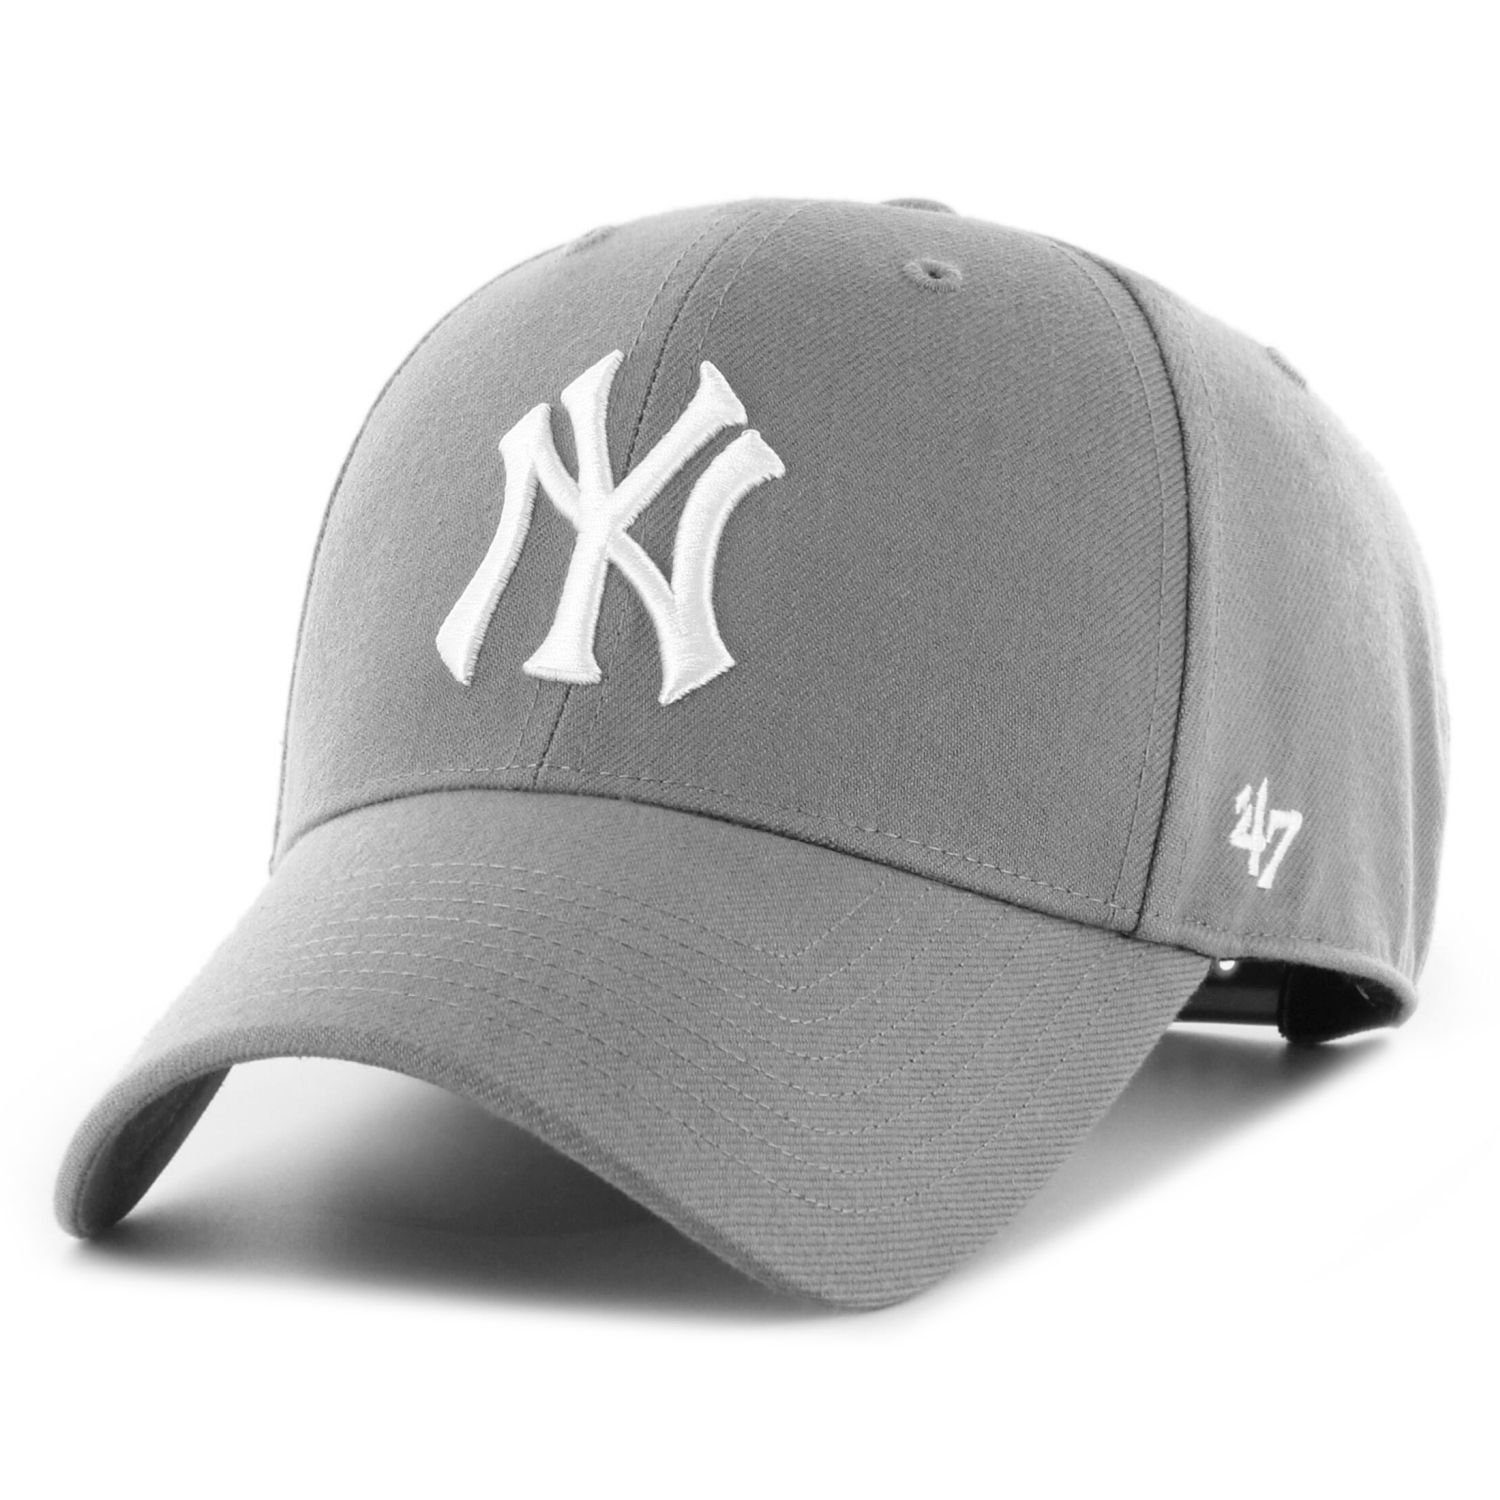 MLB Cap '47 York New Snapback Yankees Brand